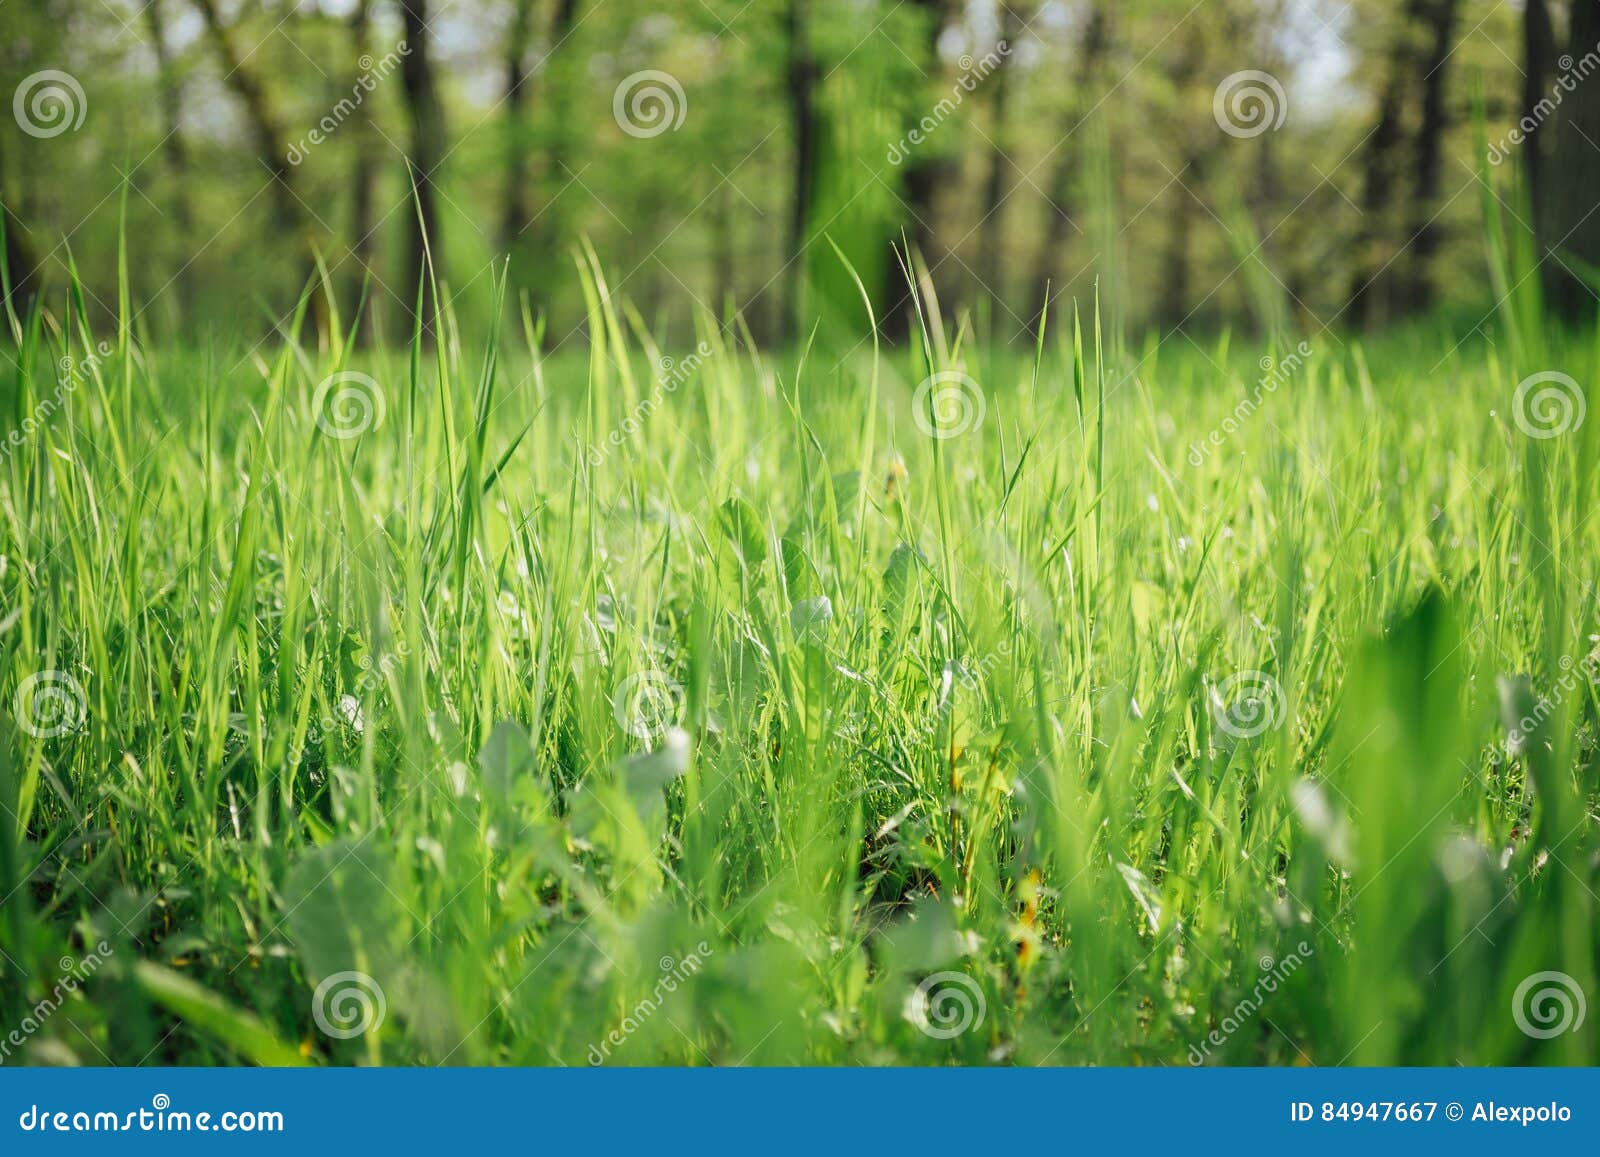 Sunlit lush grass in park stock image. Image of light - 84947667